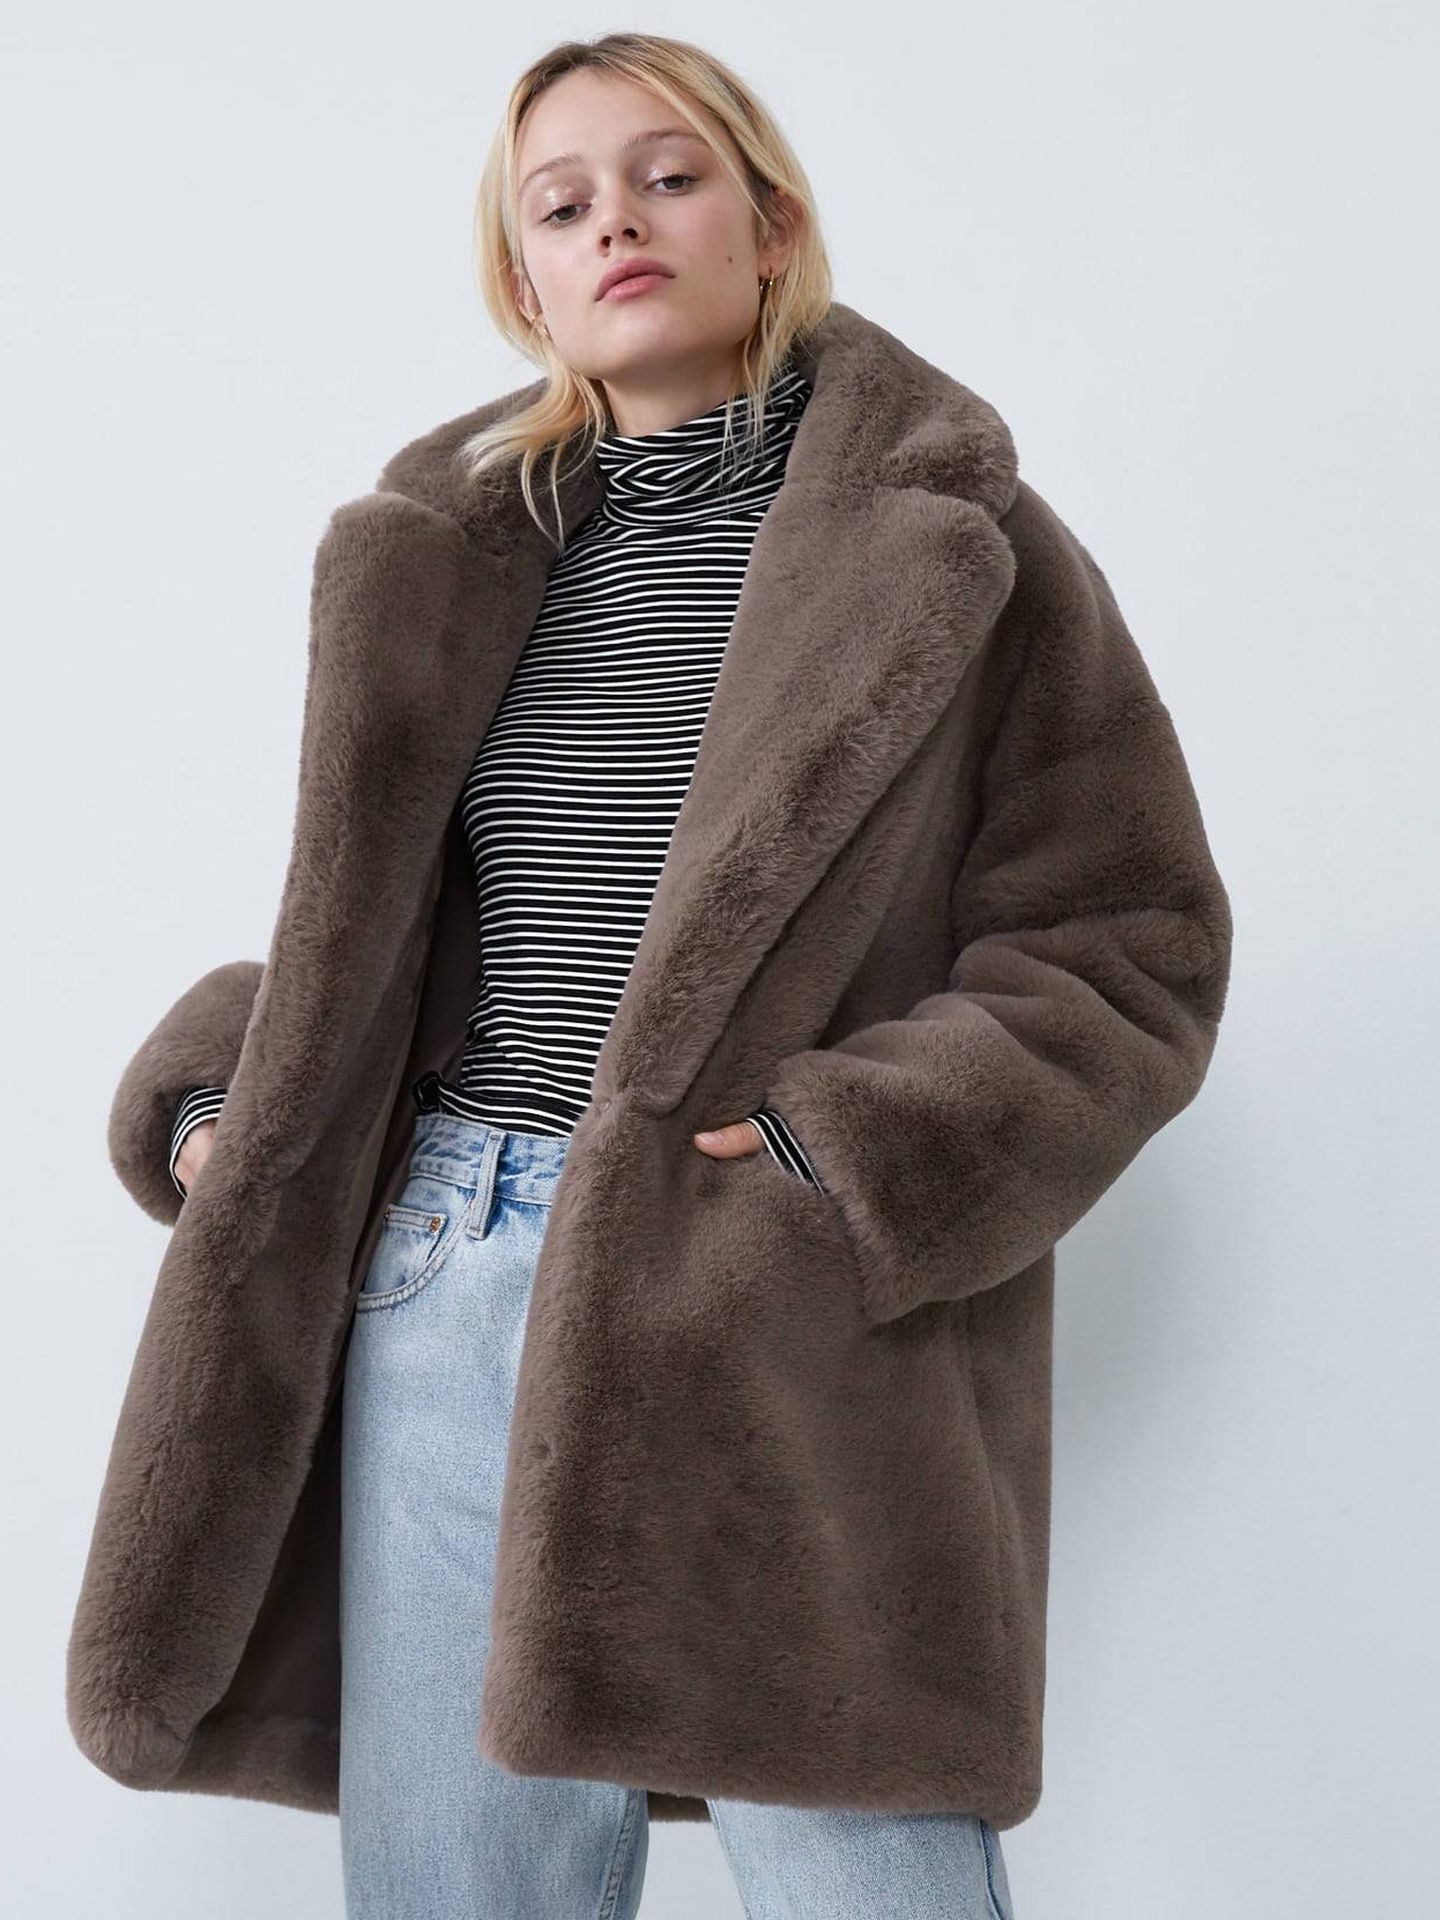 Si te fascina el abrigo teddy de pelo de Cristina Pedroche, querrás fichar estos Zara